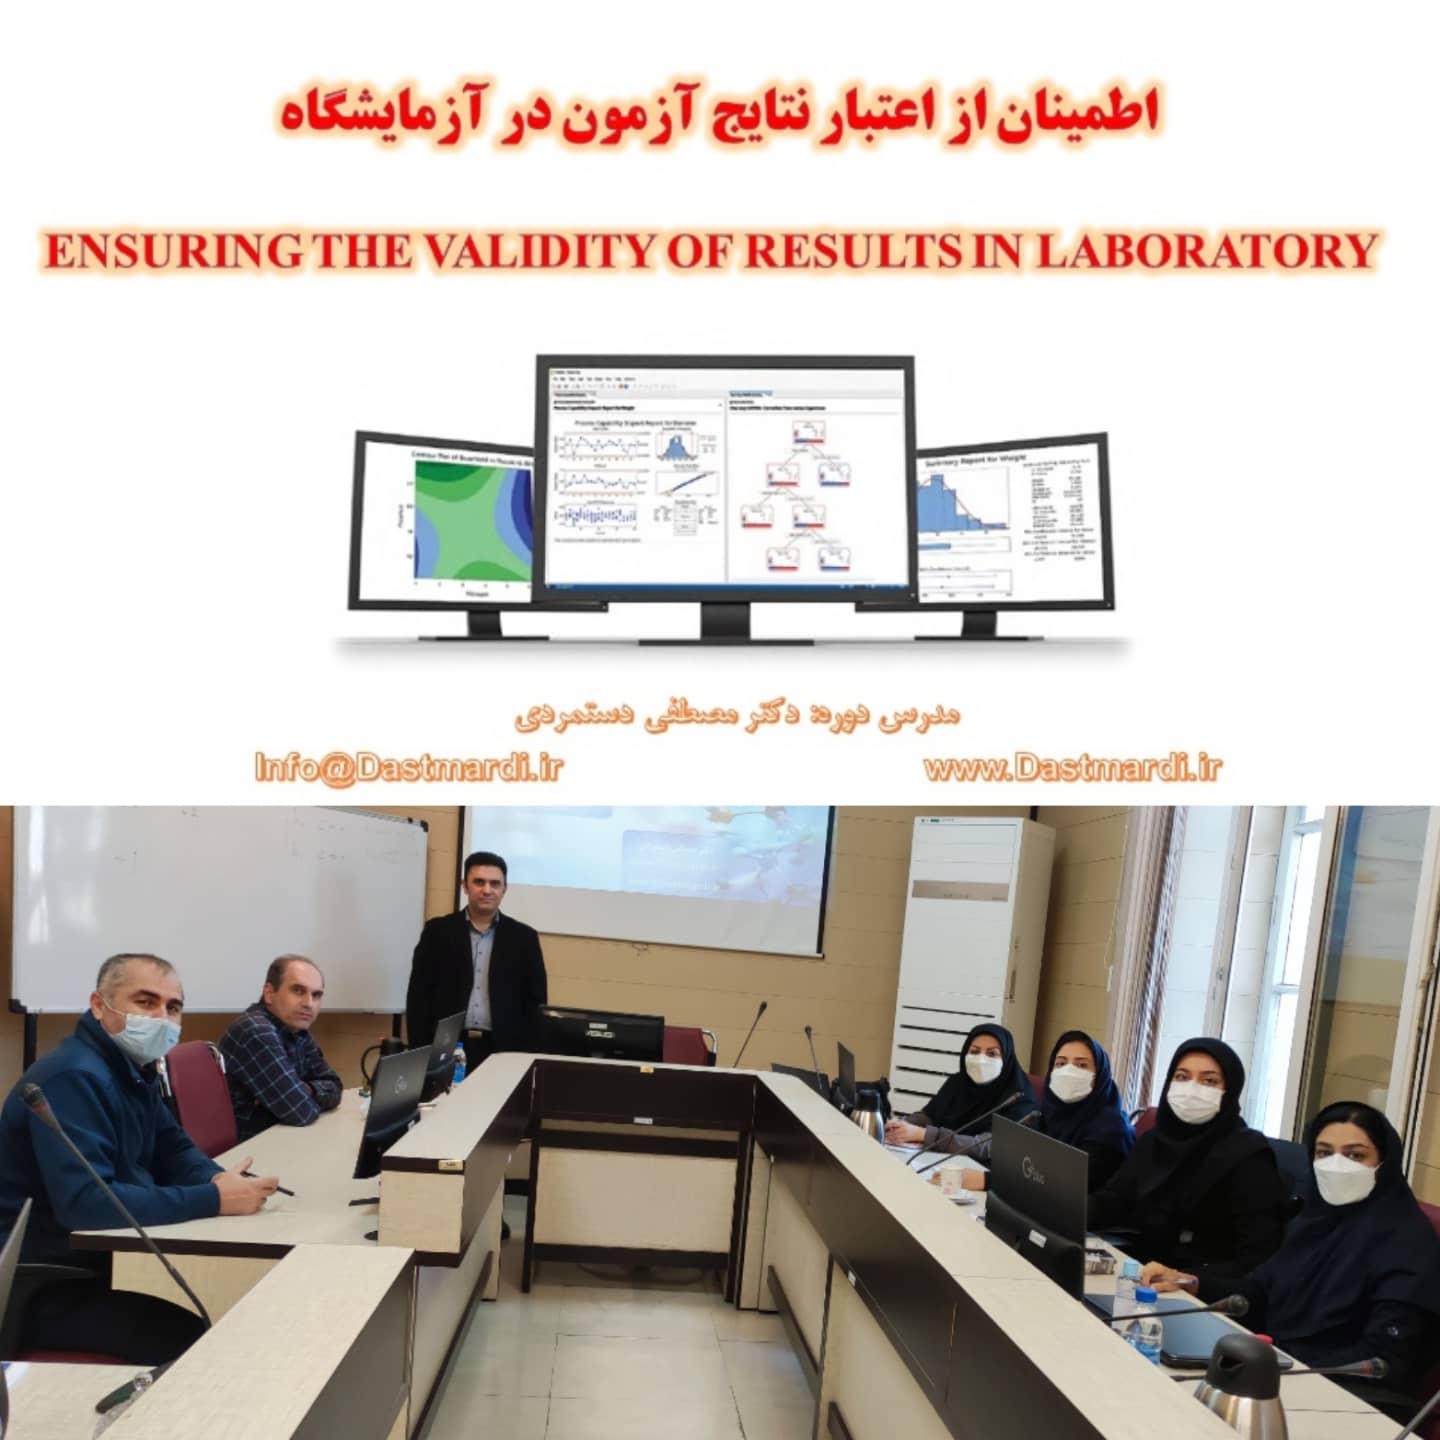 IMG 20211127 WA0031 برگزاری دوره آموزش اطمینان از اعتبار نتایج آزمون در آزمایشگاه با استفاده از نرم افزار MINITAB برای اداره کل غله و خدمات بازرگانی استان تهران